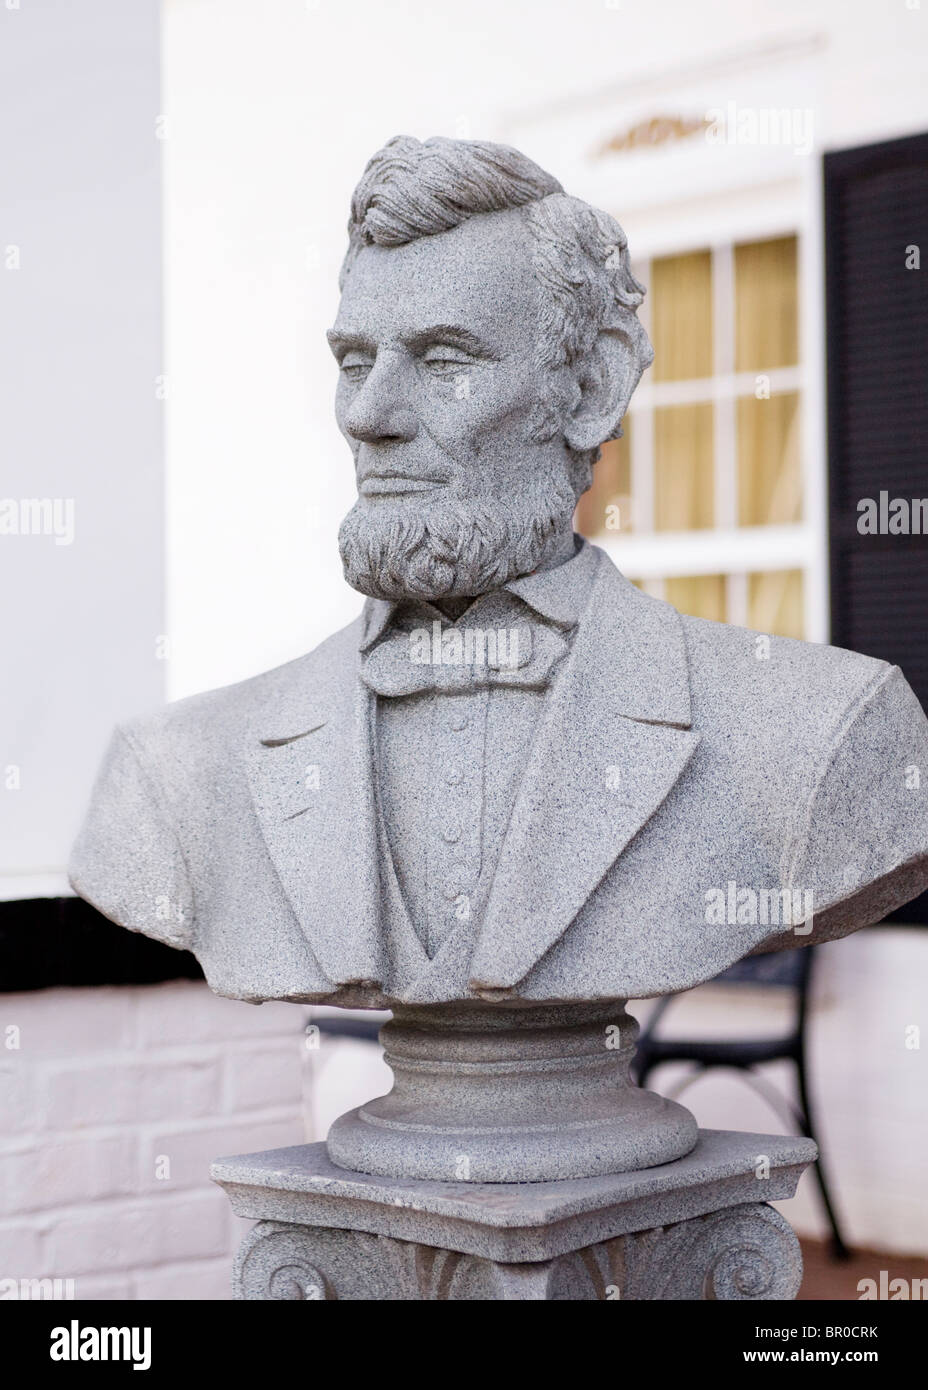 President Abraham Lincoln Bust Statue Historical Figure Sculpture 